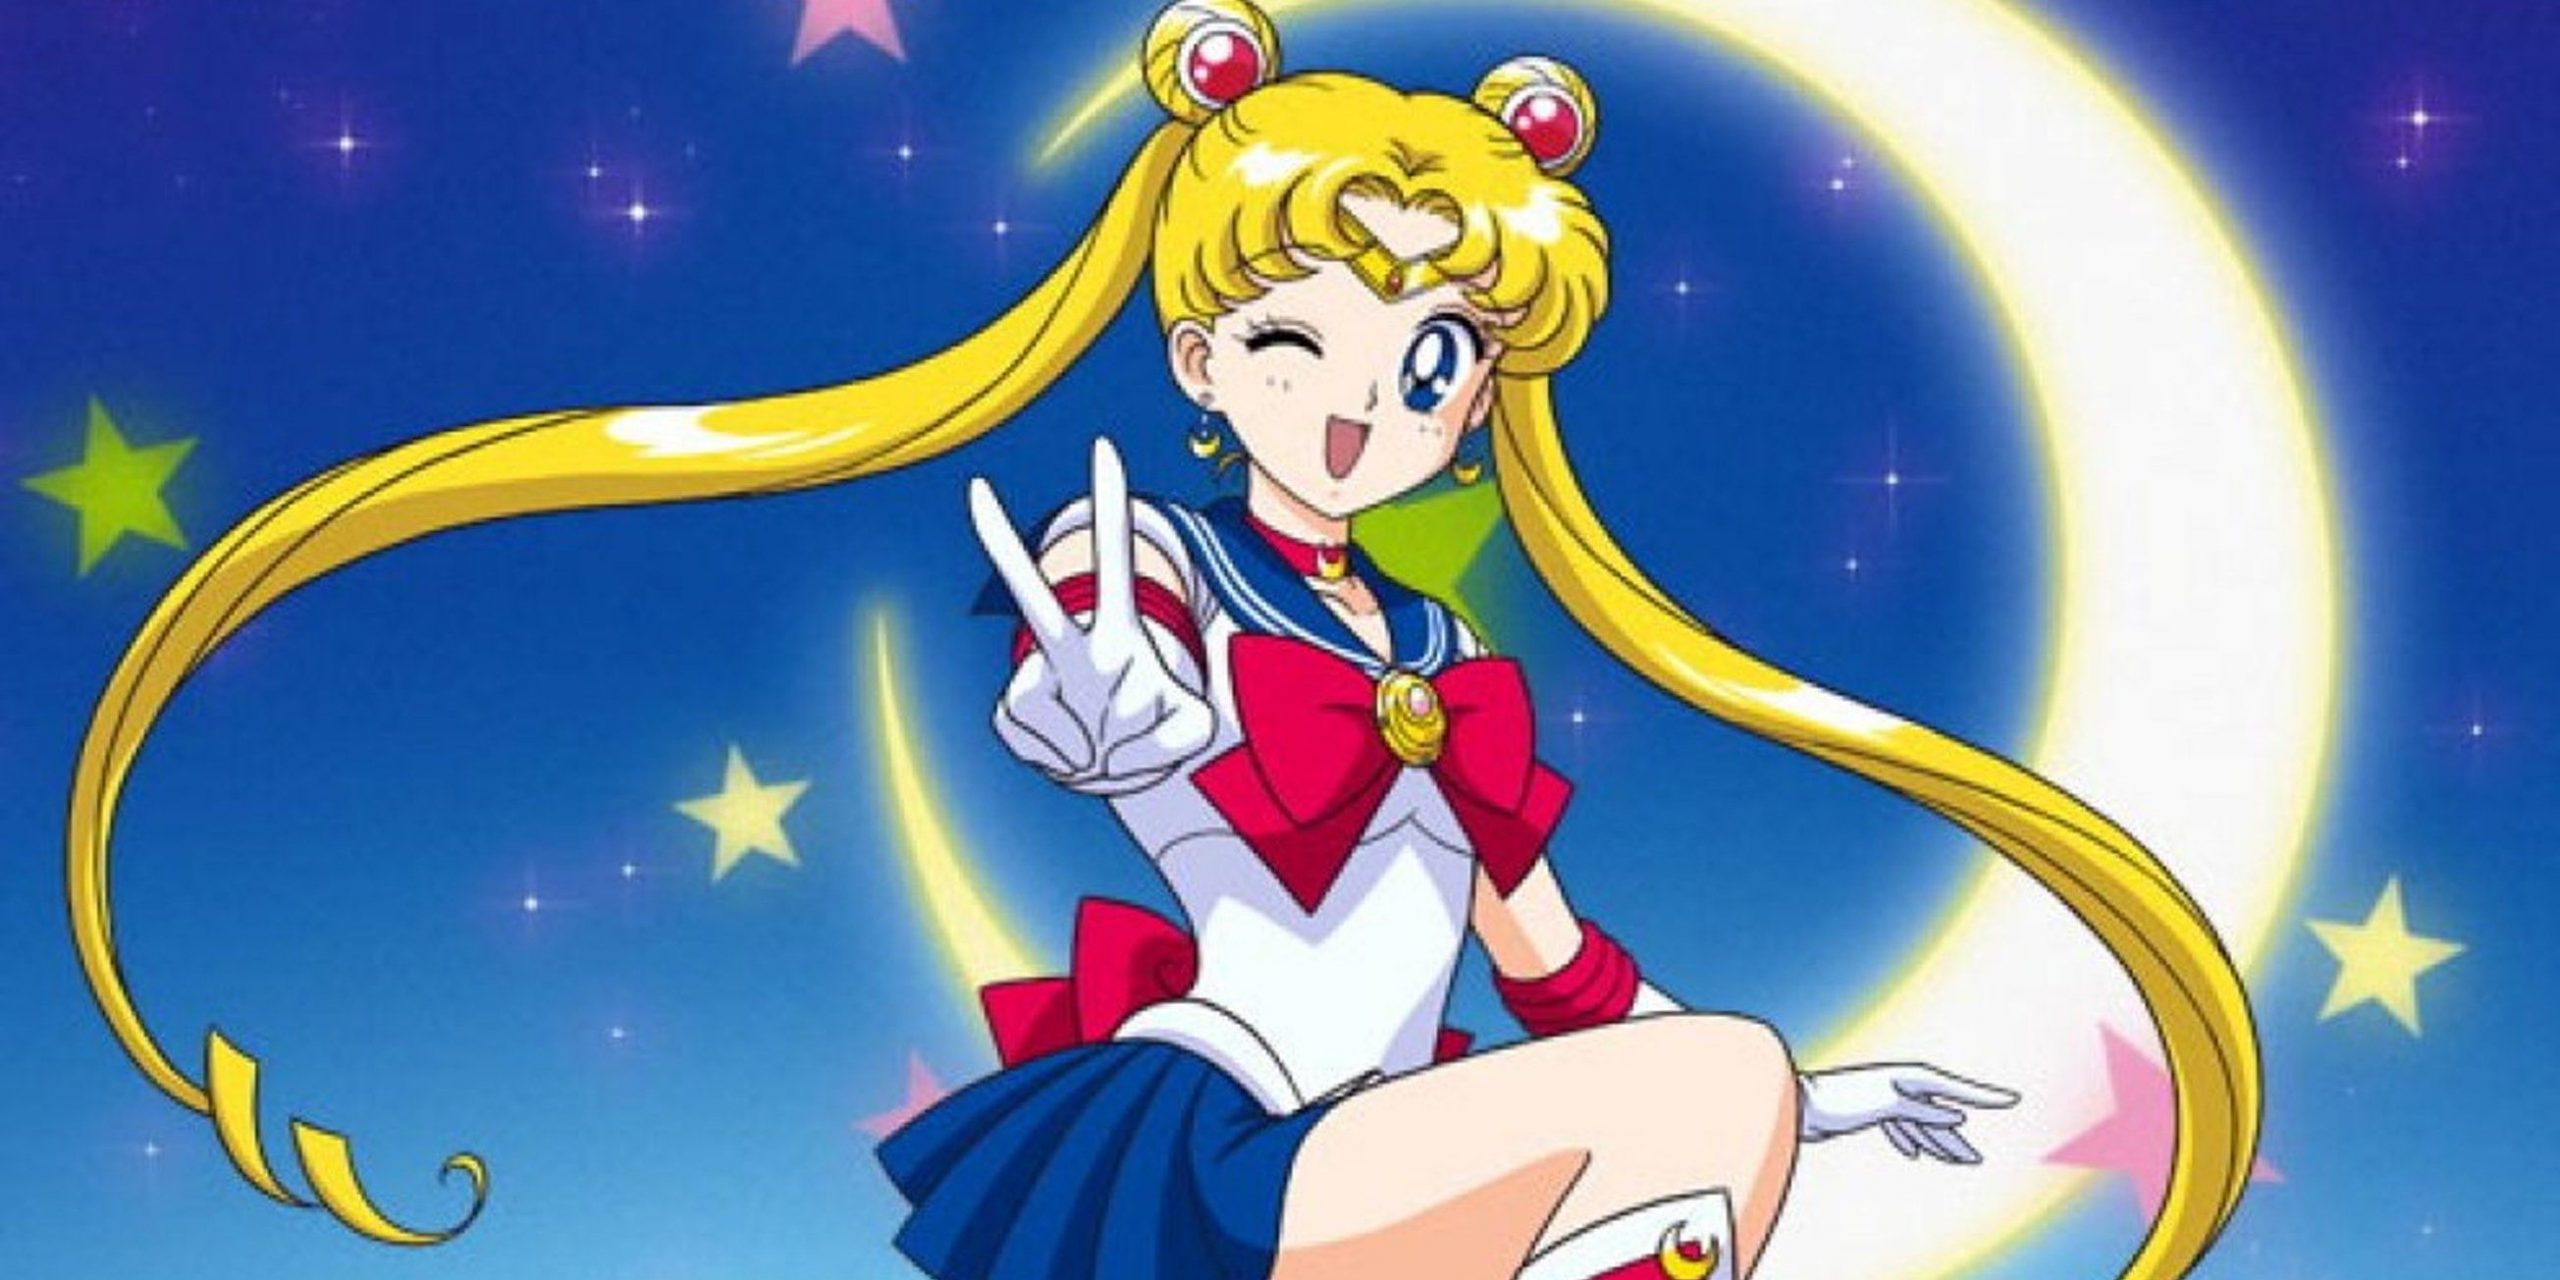 #ProSieben MAXX shows “Sailor Moon” feature films